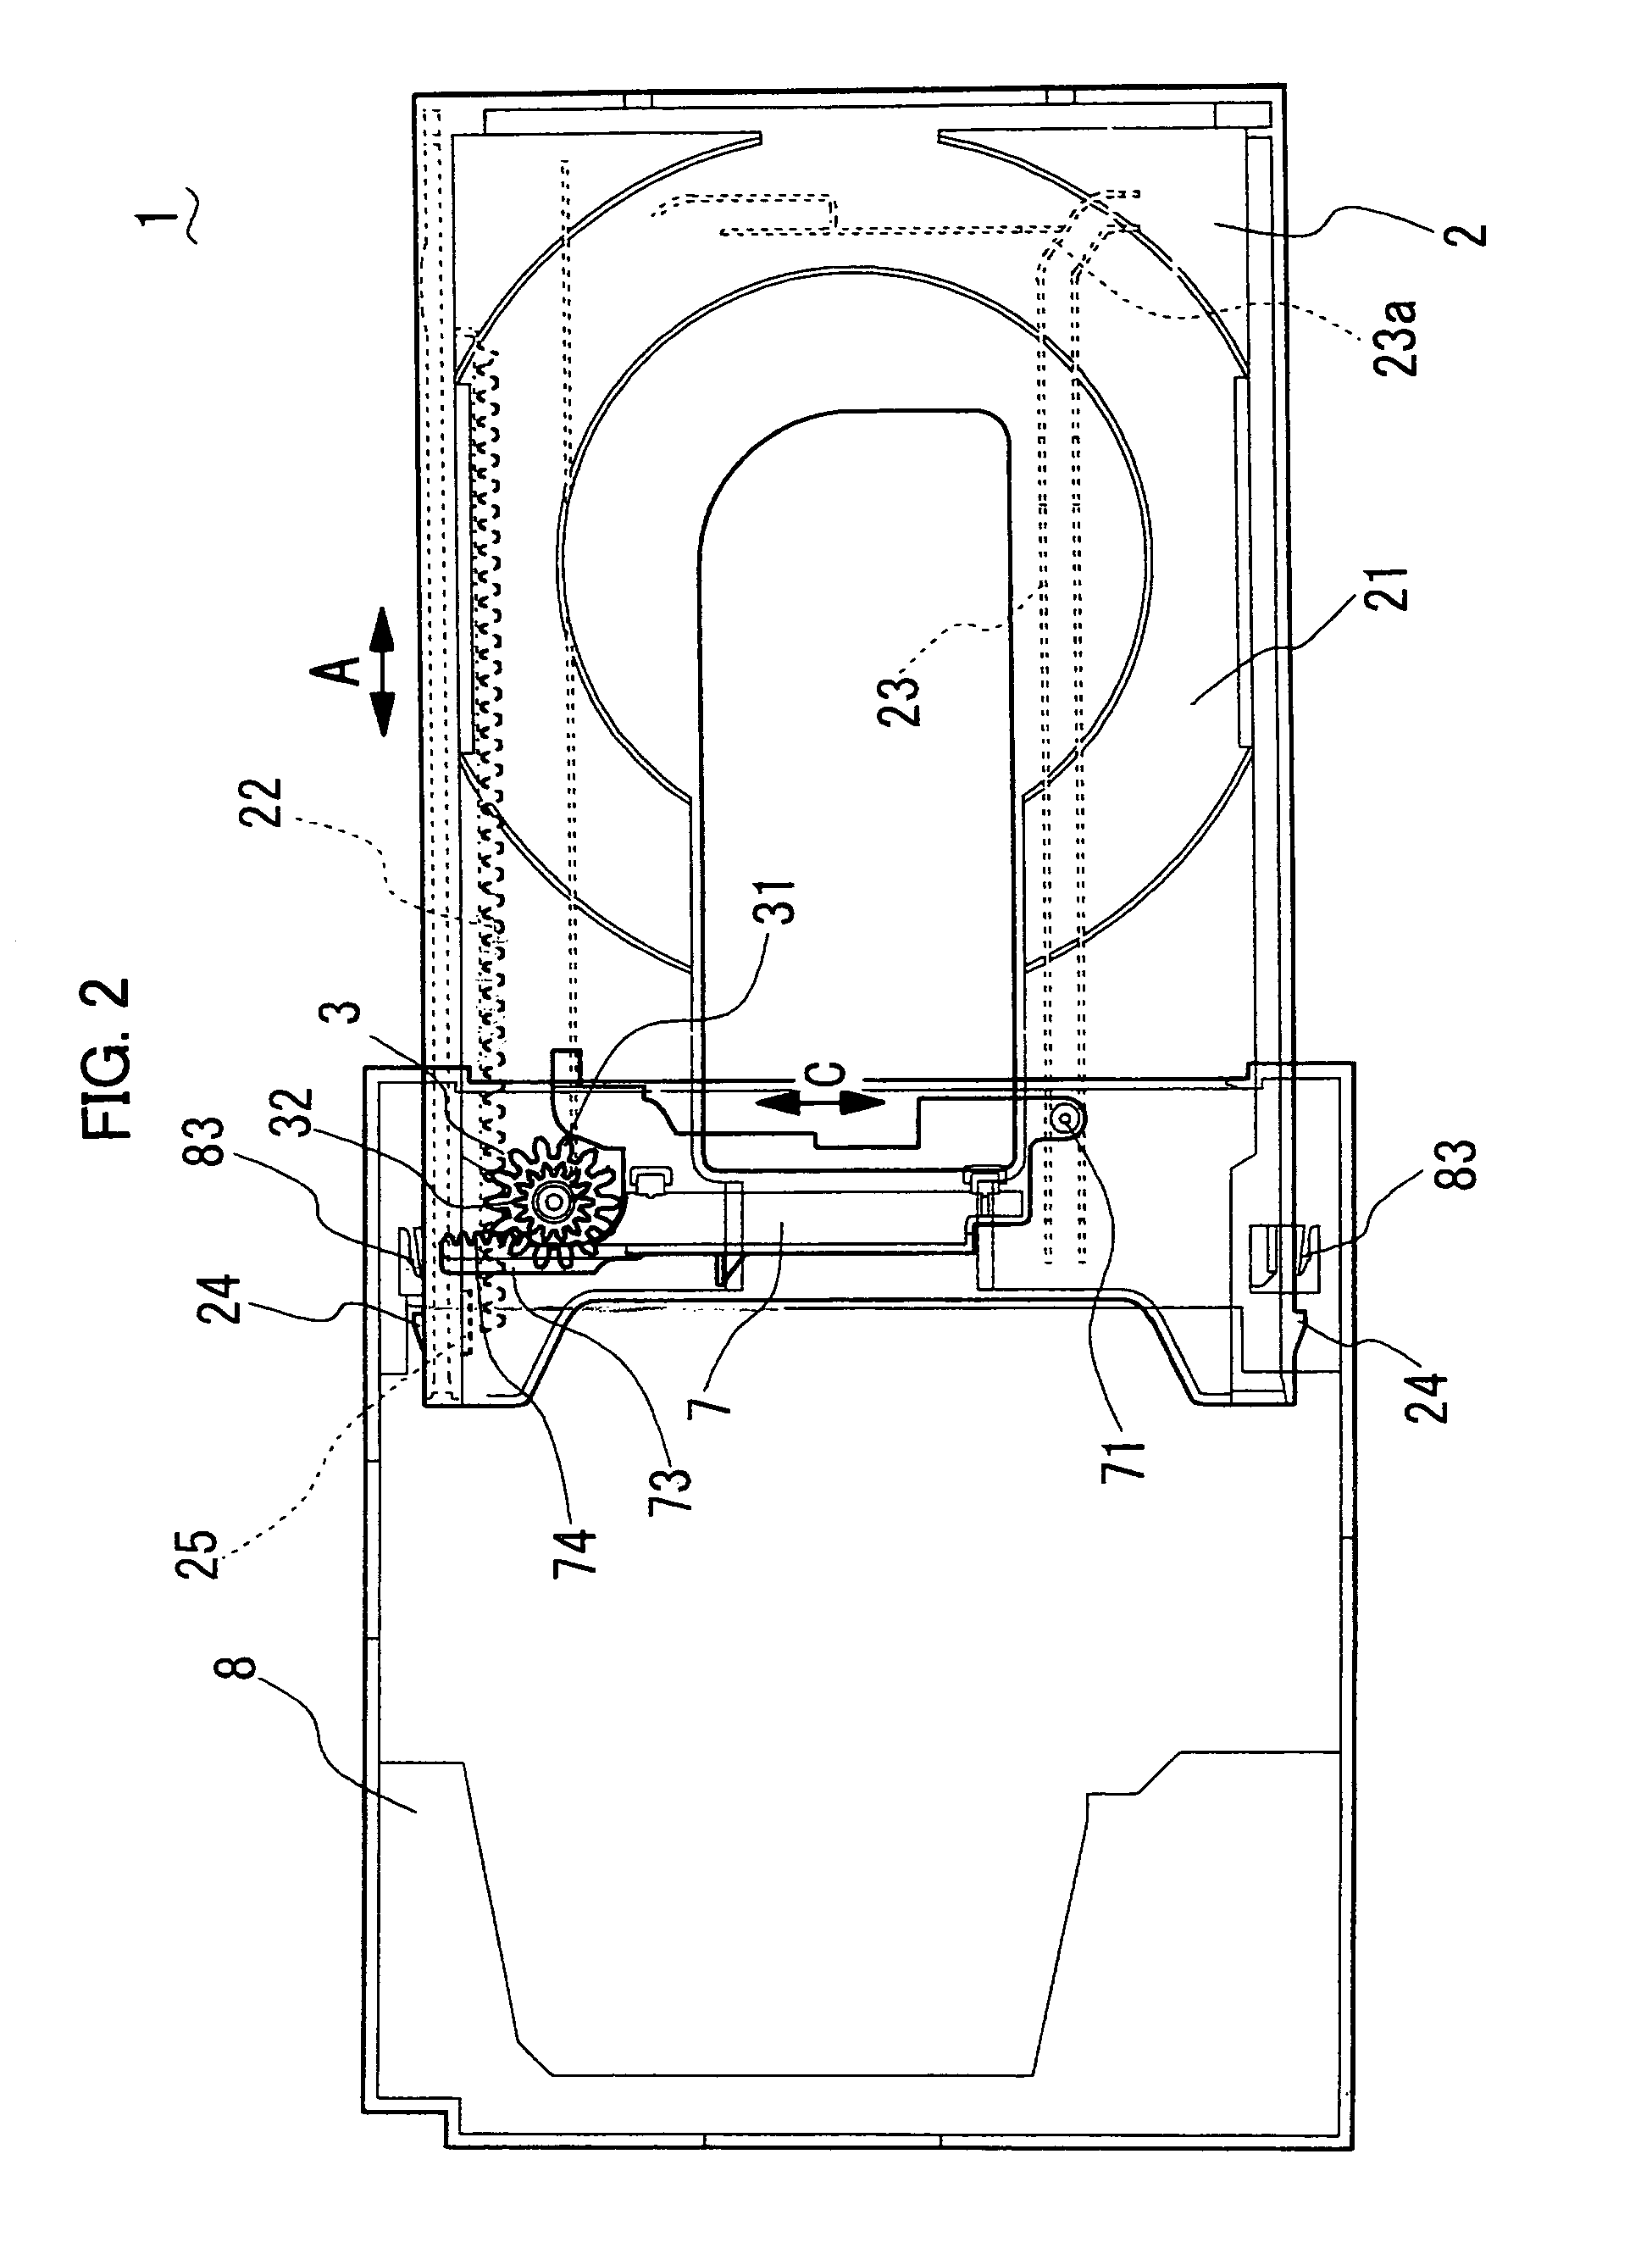 Optical disc apparatus